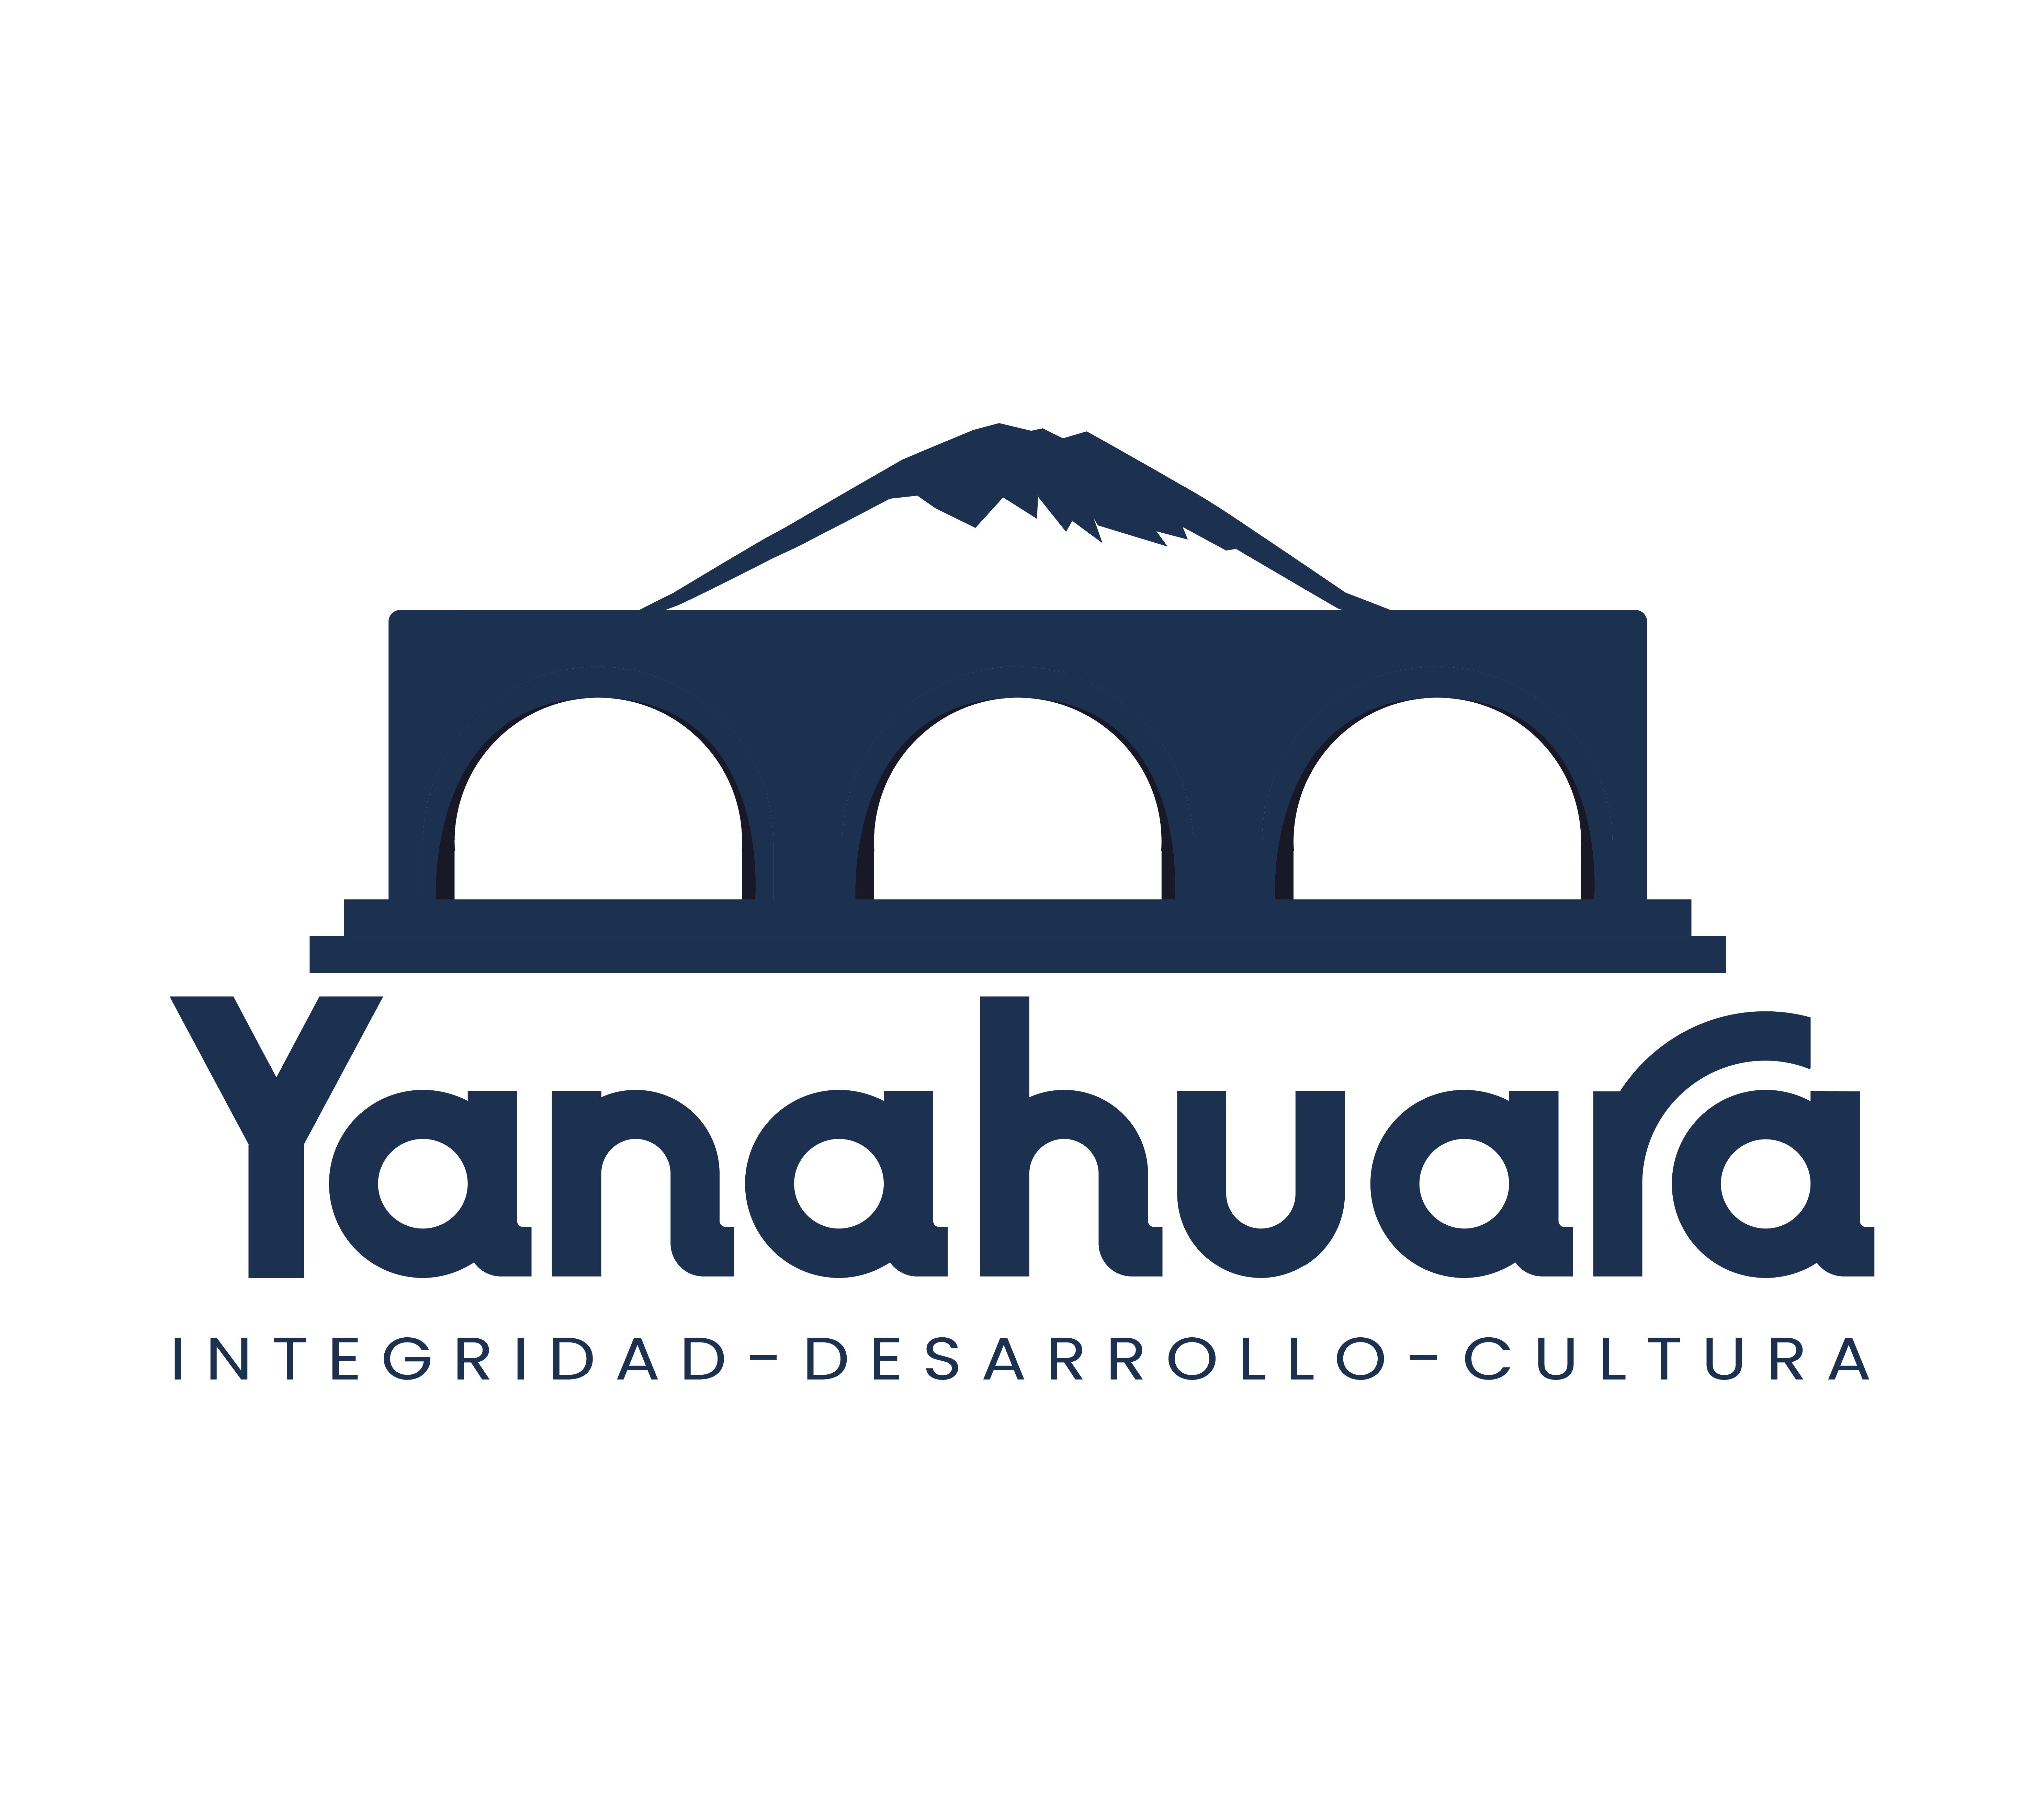 Yanahuara